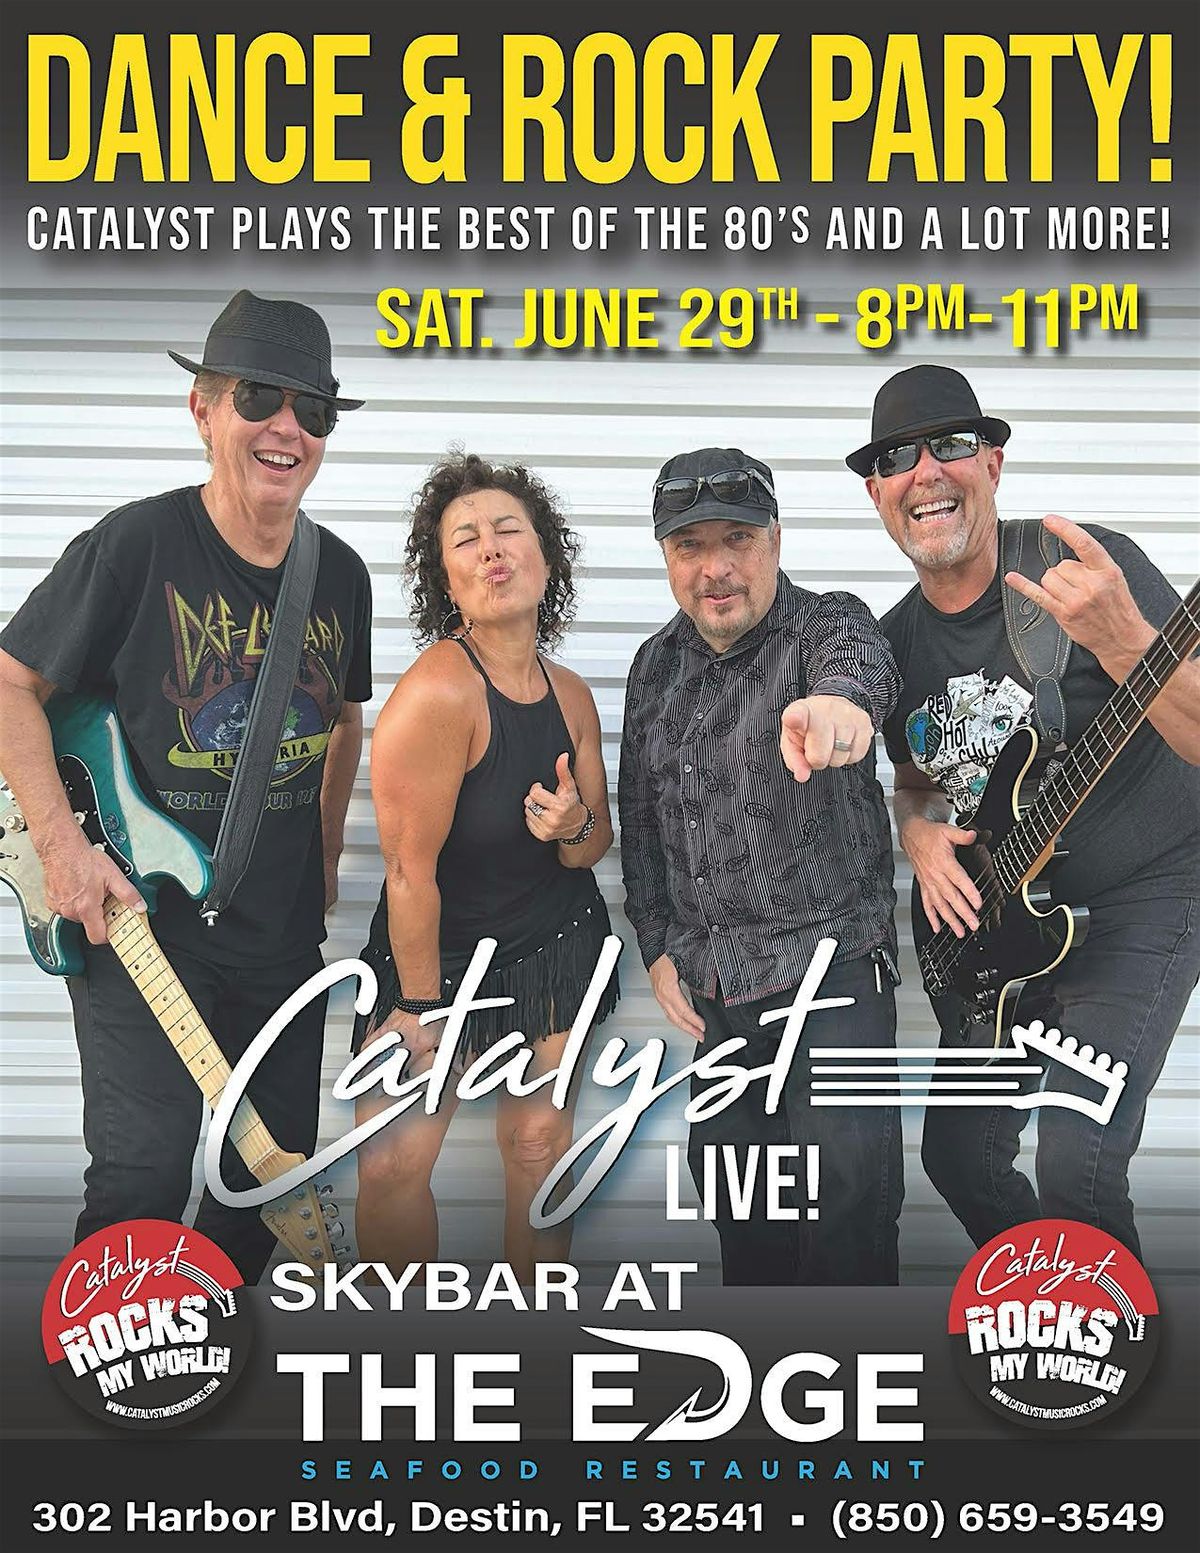 Catalyst returns to Rock the Skybar @The Edge Restaurant